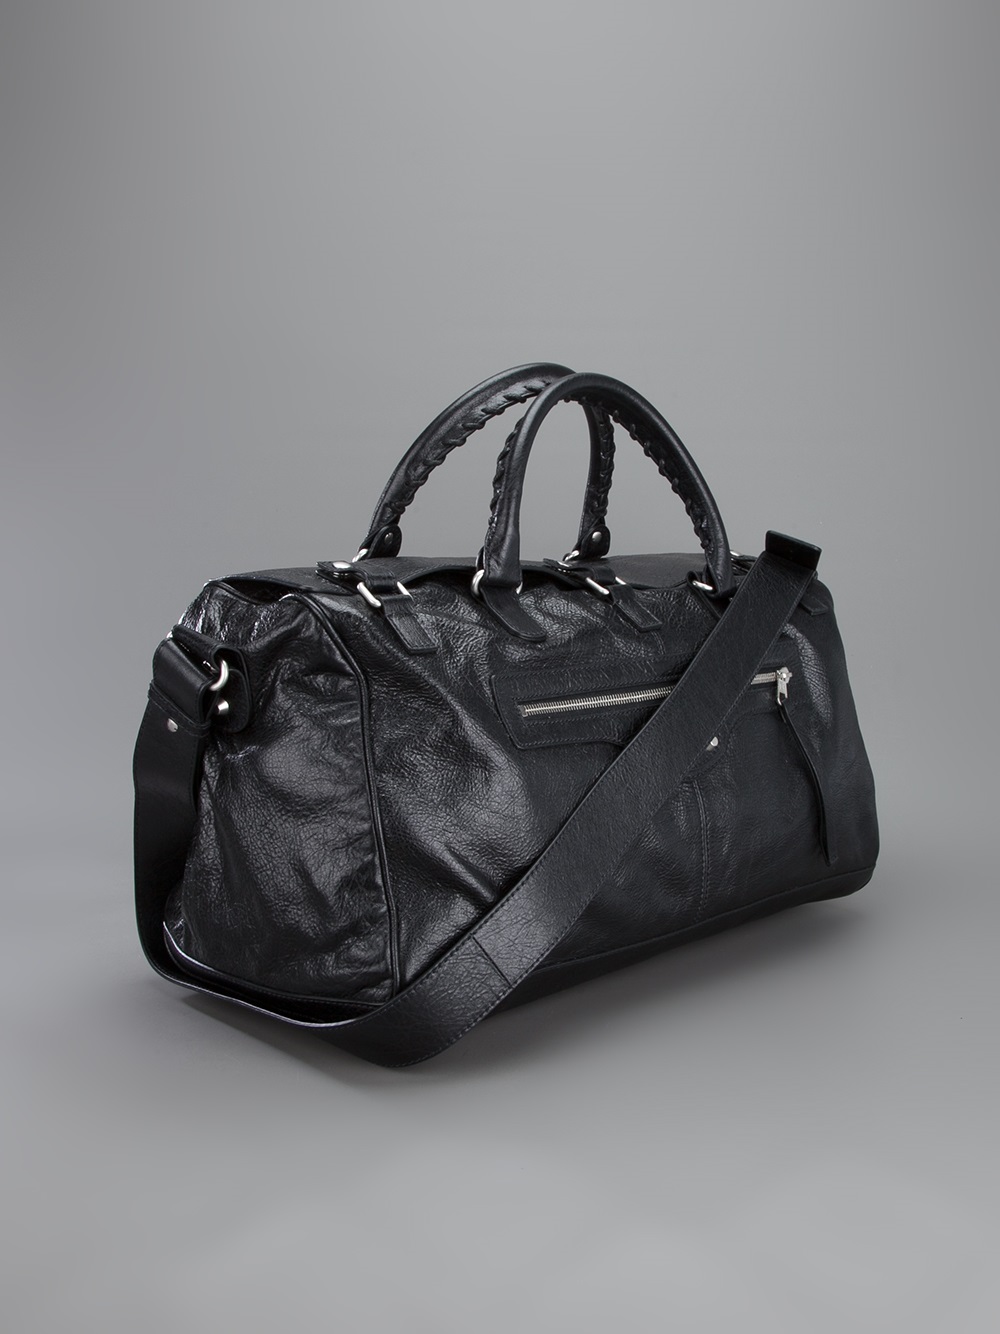 Balenciaga Lariat Squash Bag in Black for Men - Lyst